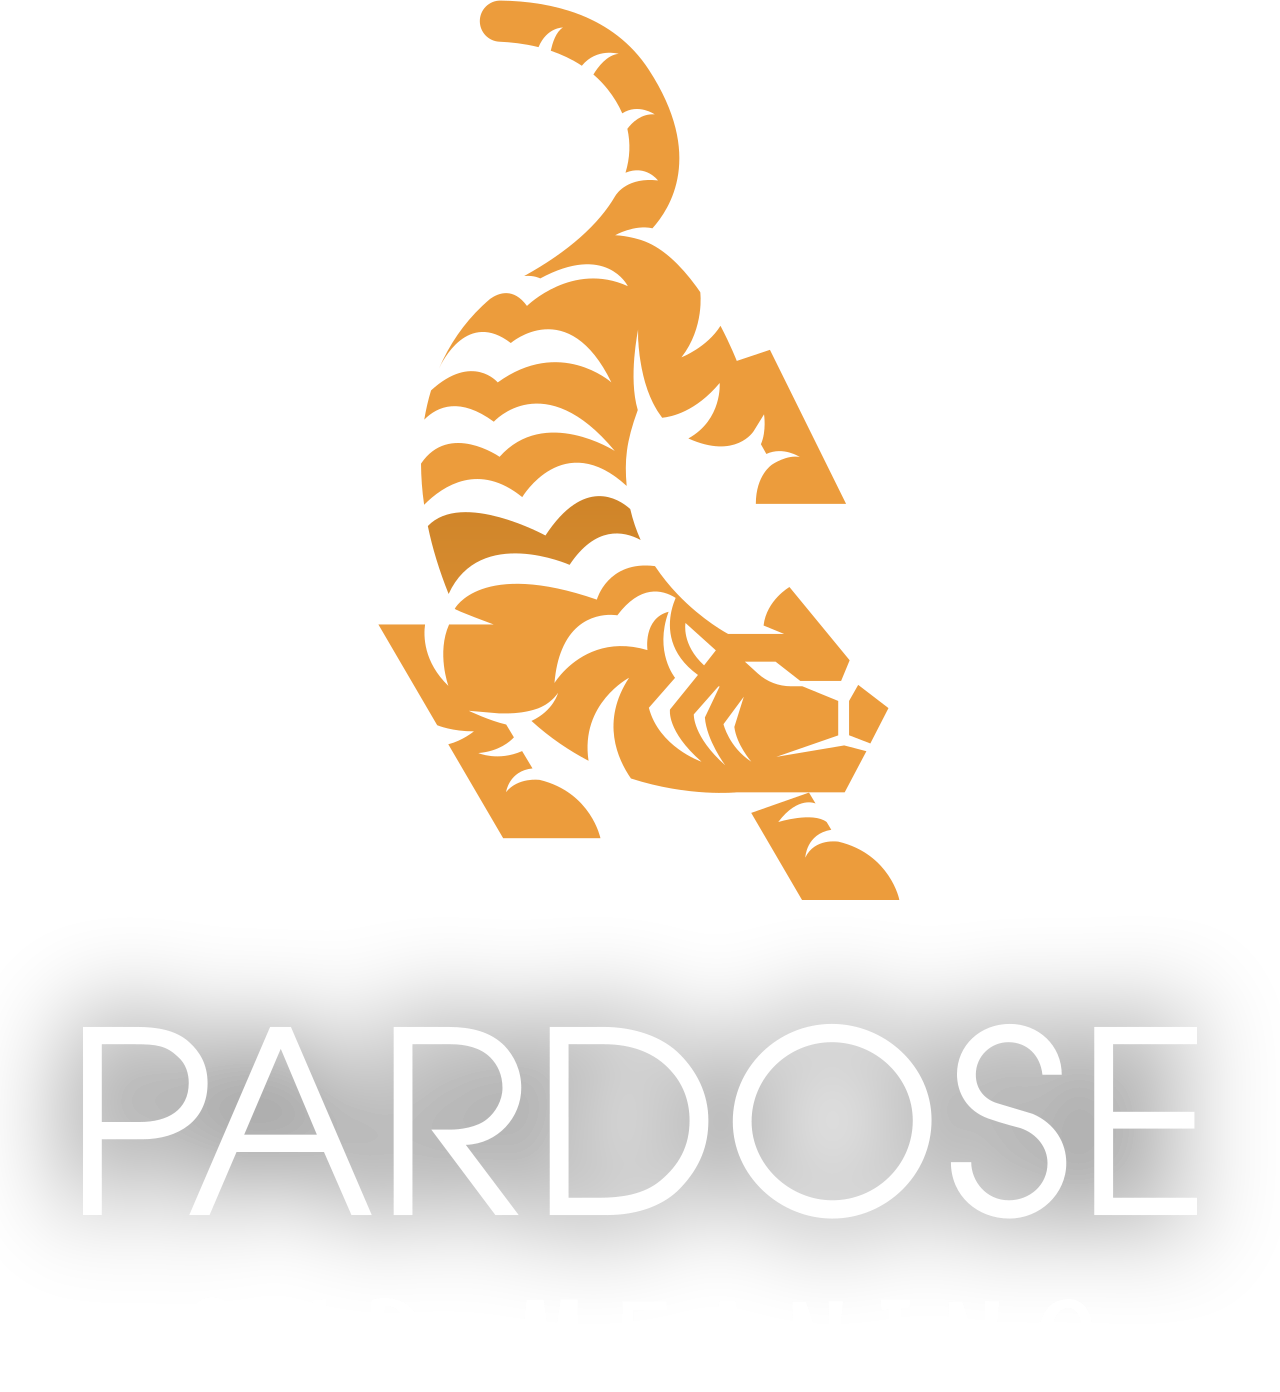 Pardose's logo